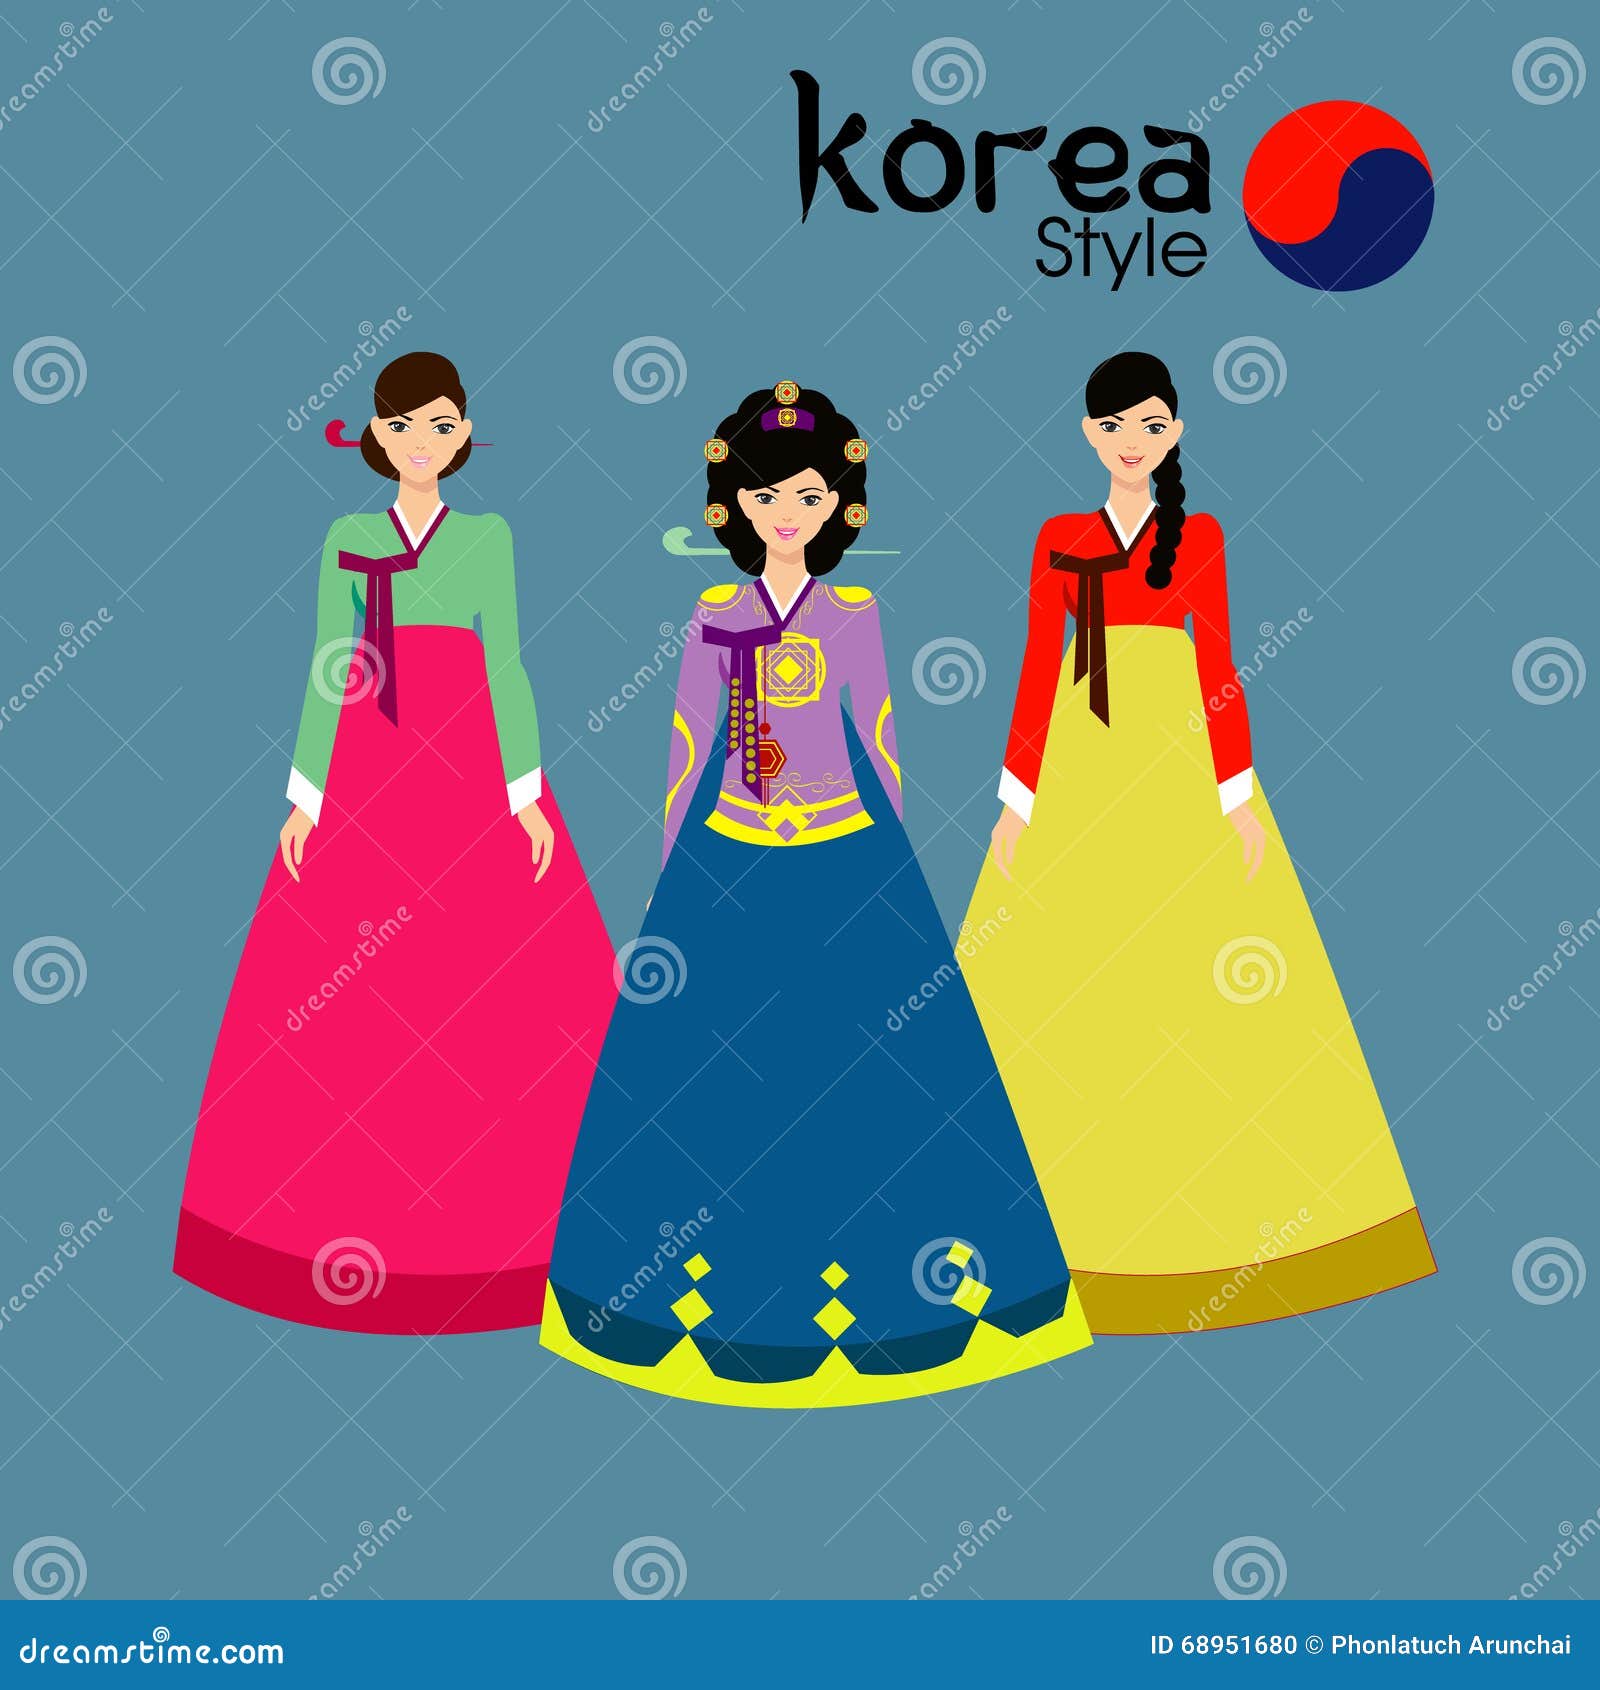 Discover 177+ korean dress design super hot